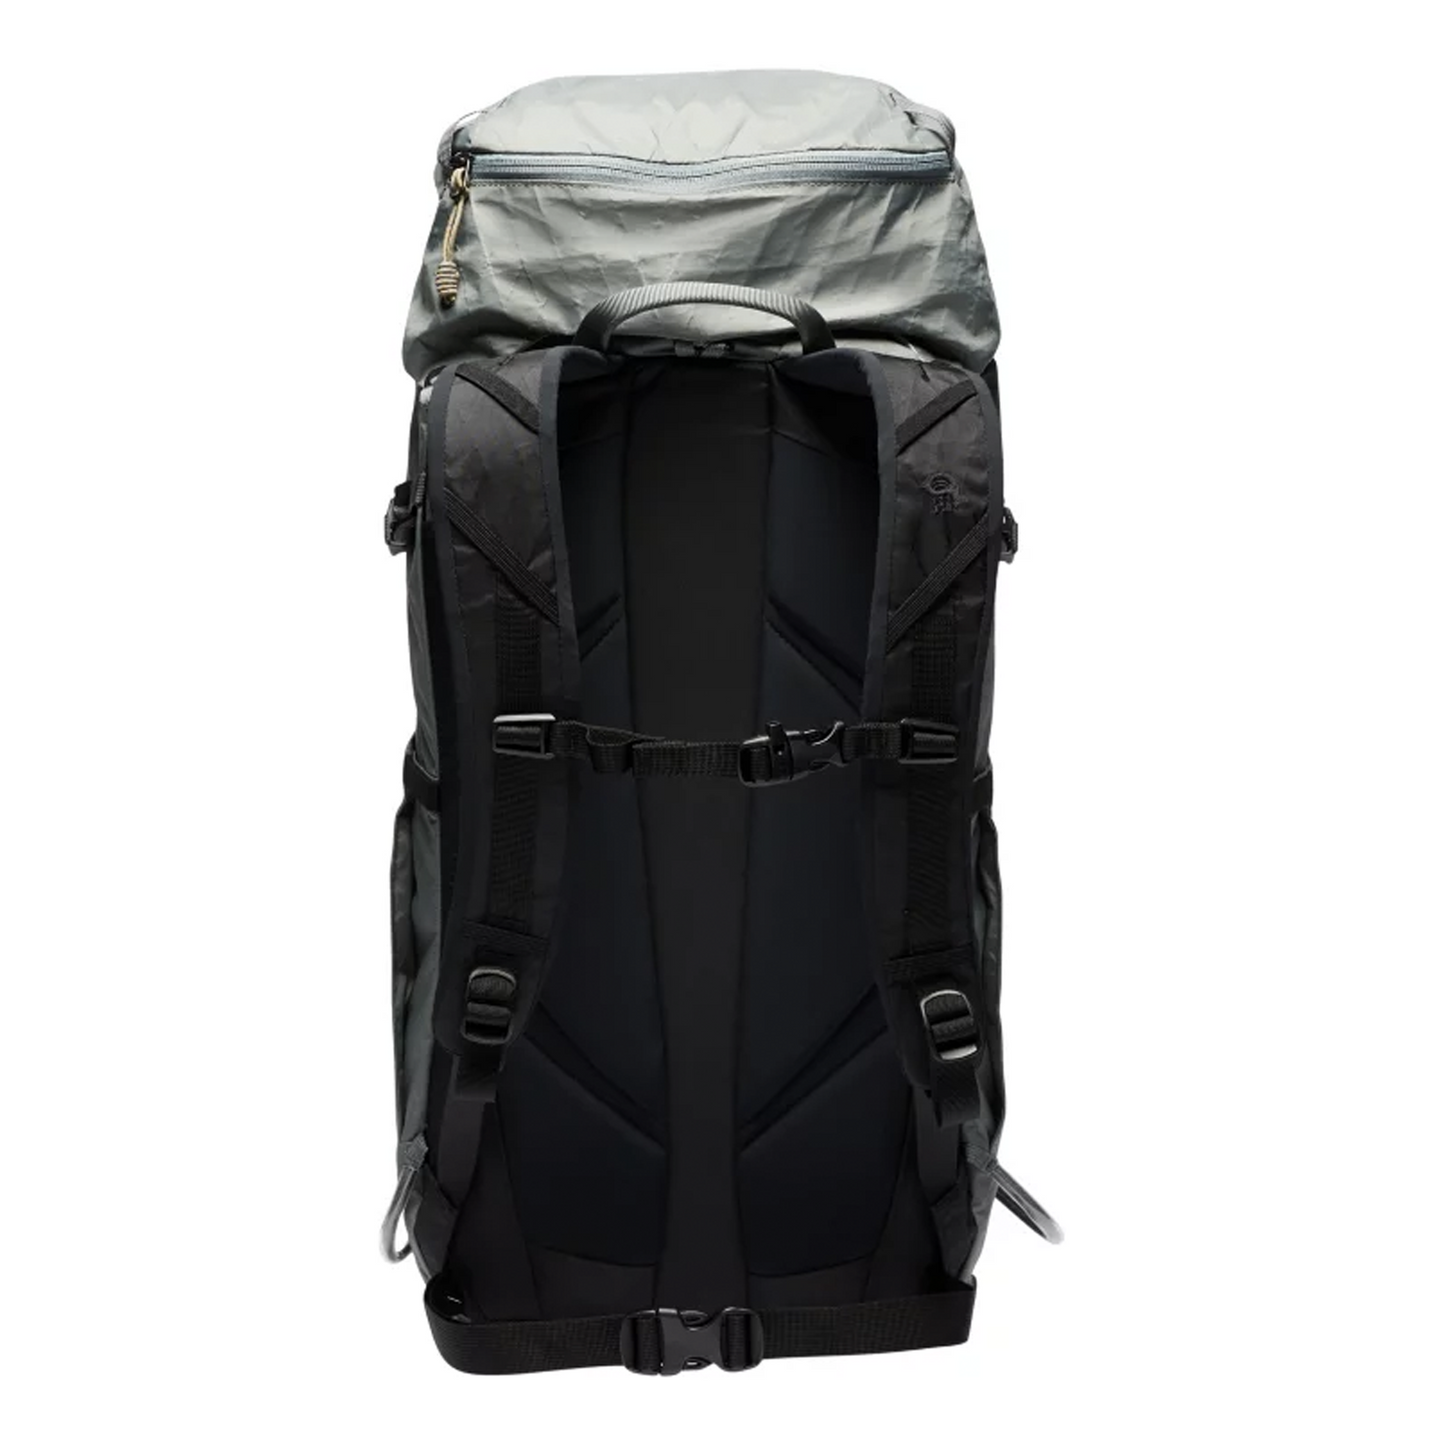 Scrambler™ 35 Backpack